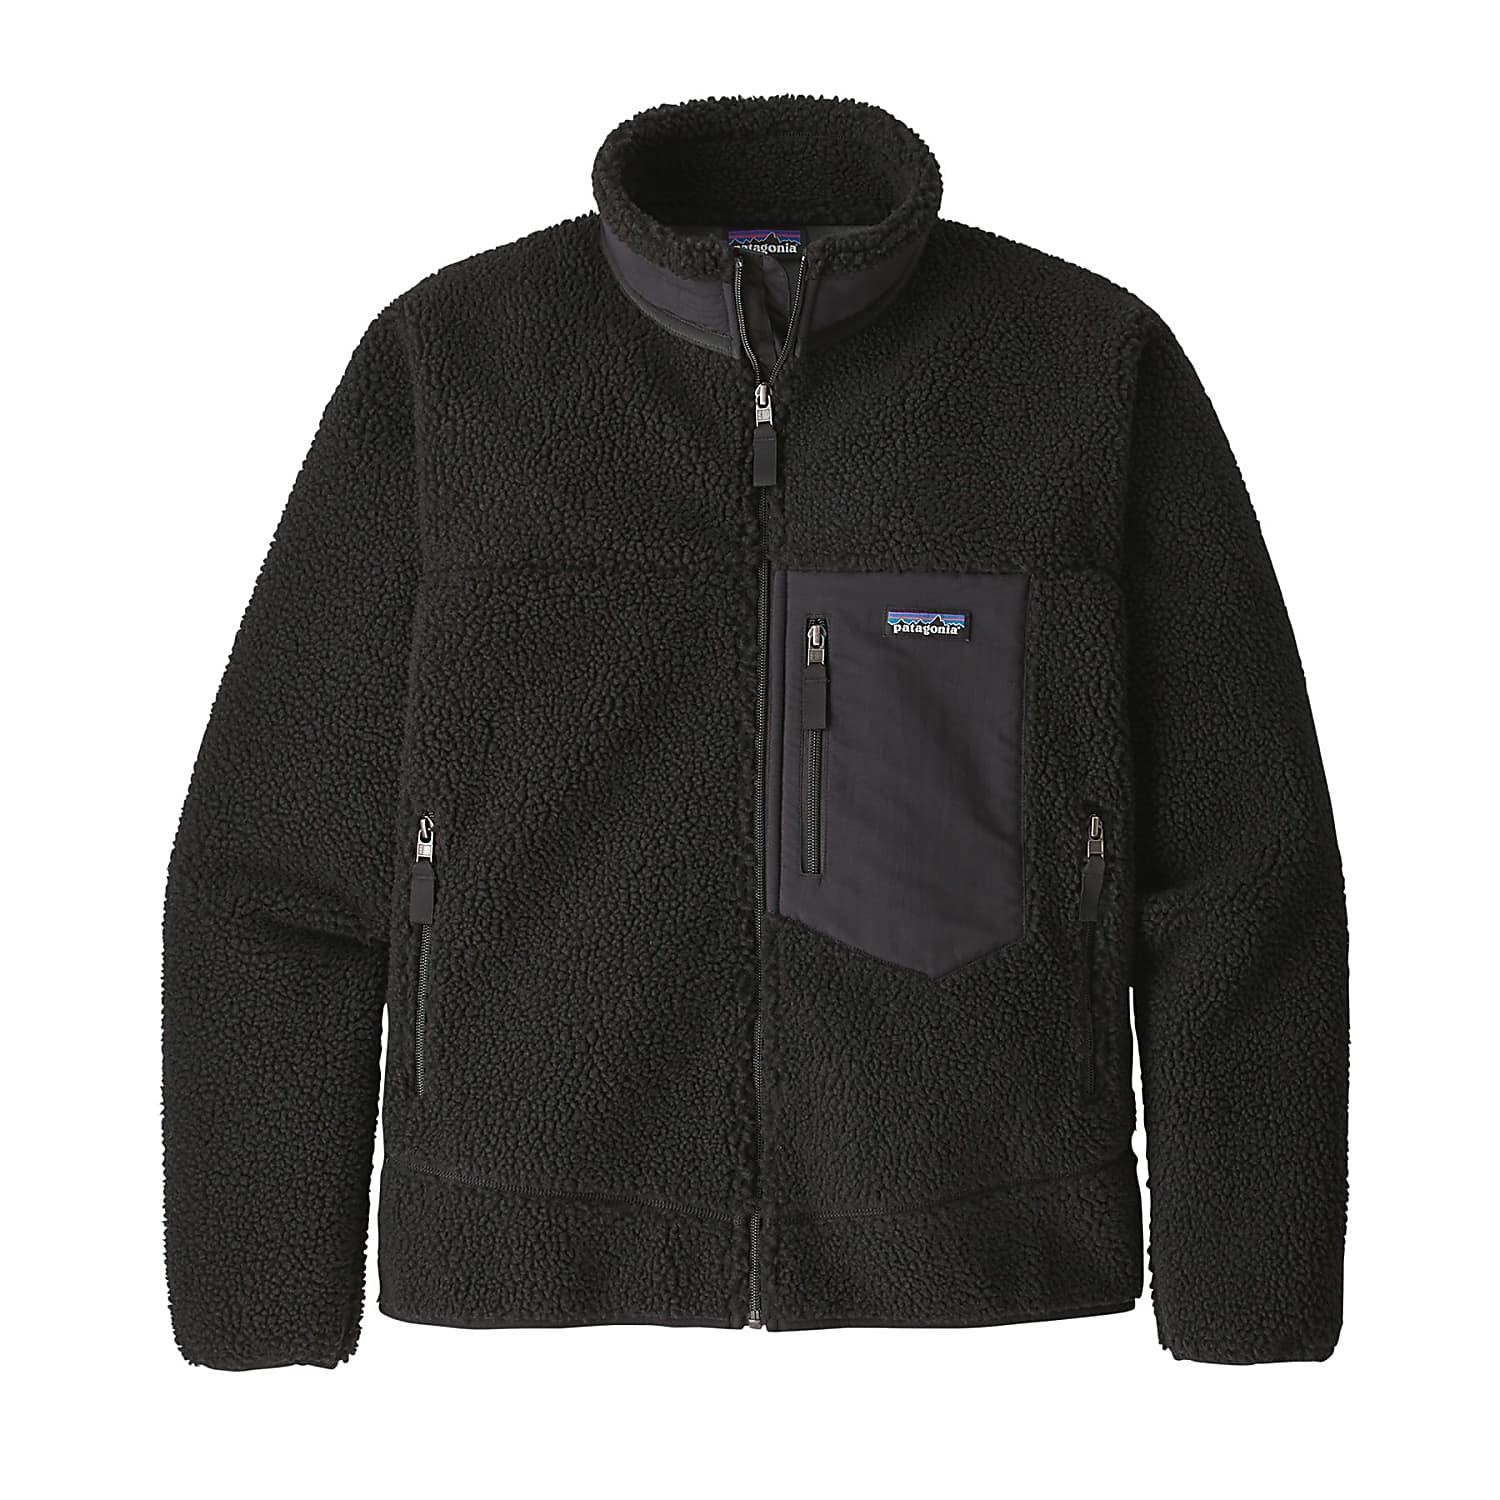 Patagonia M's Classic Retro X Fleece Jacket - Black/Black - Medium